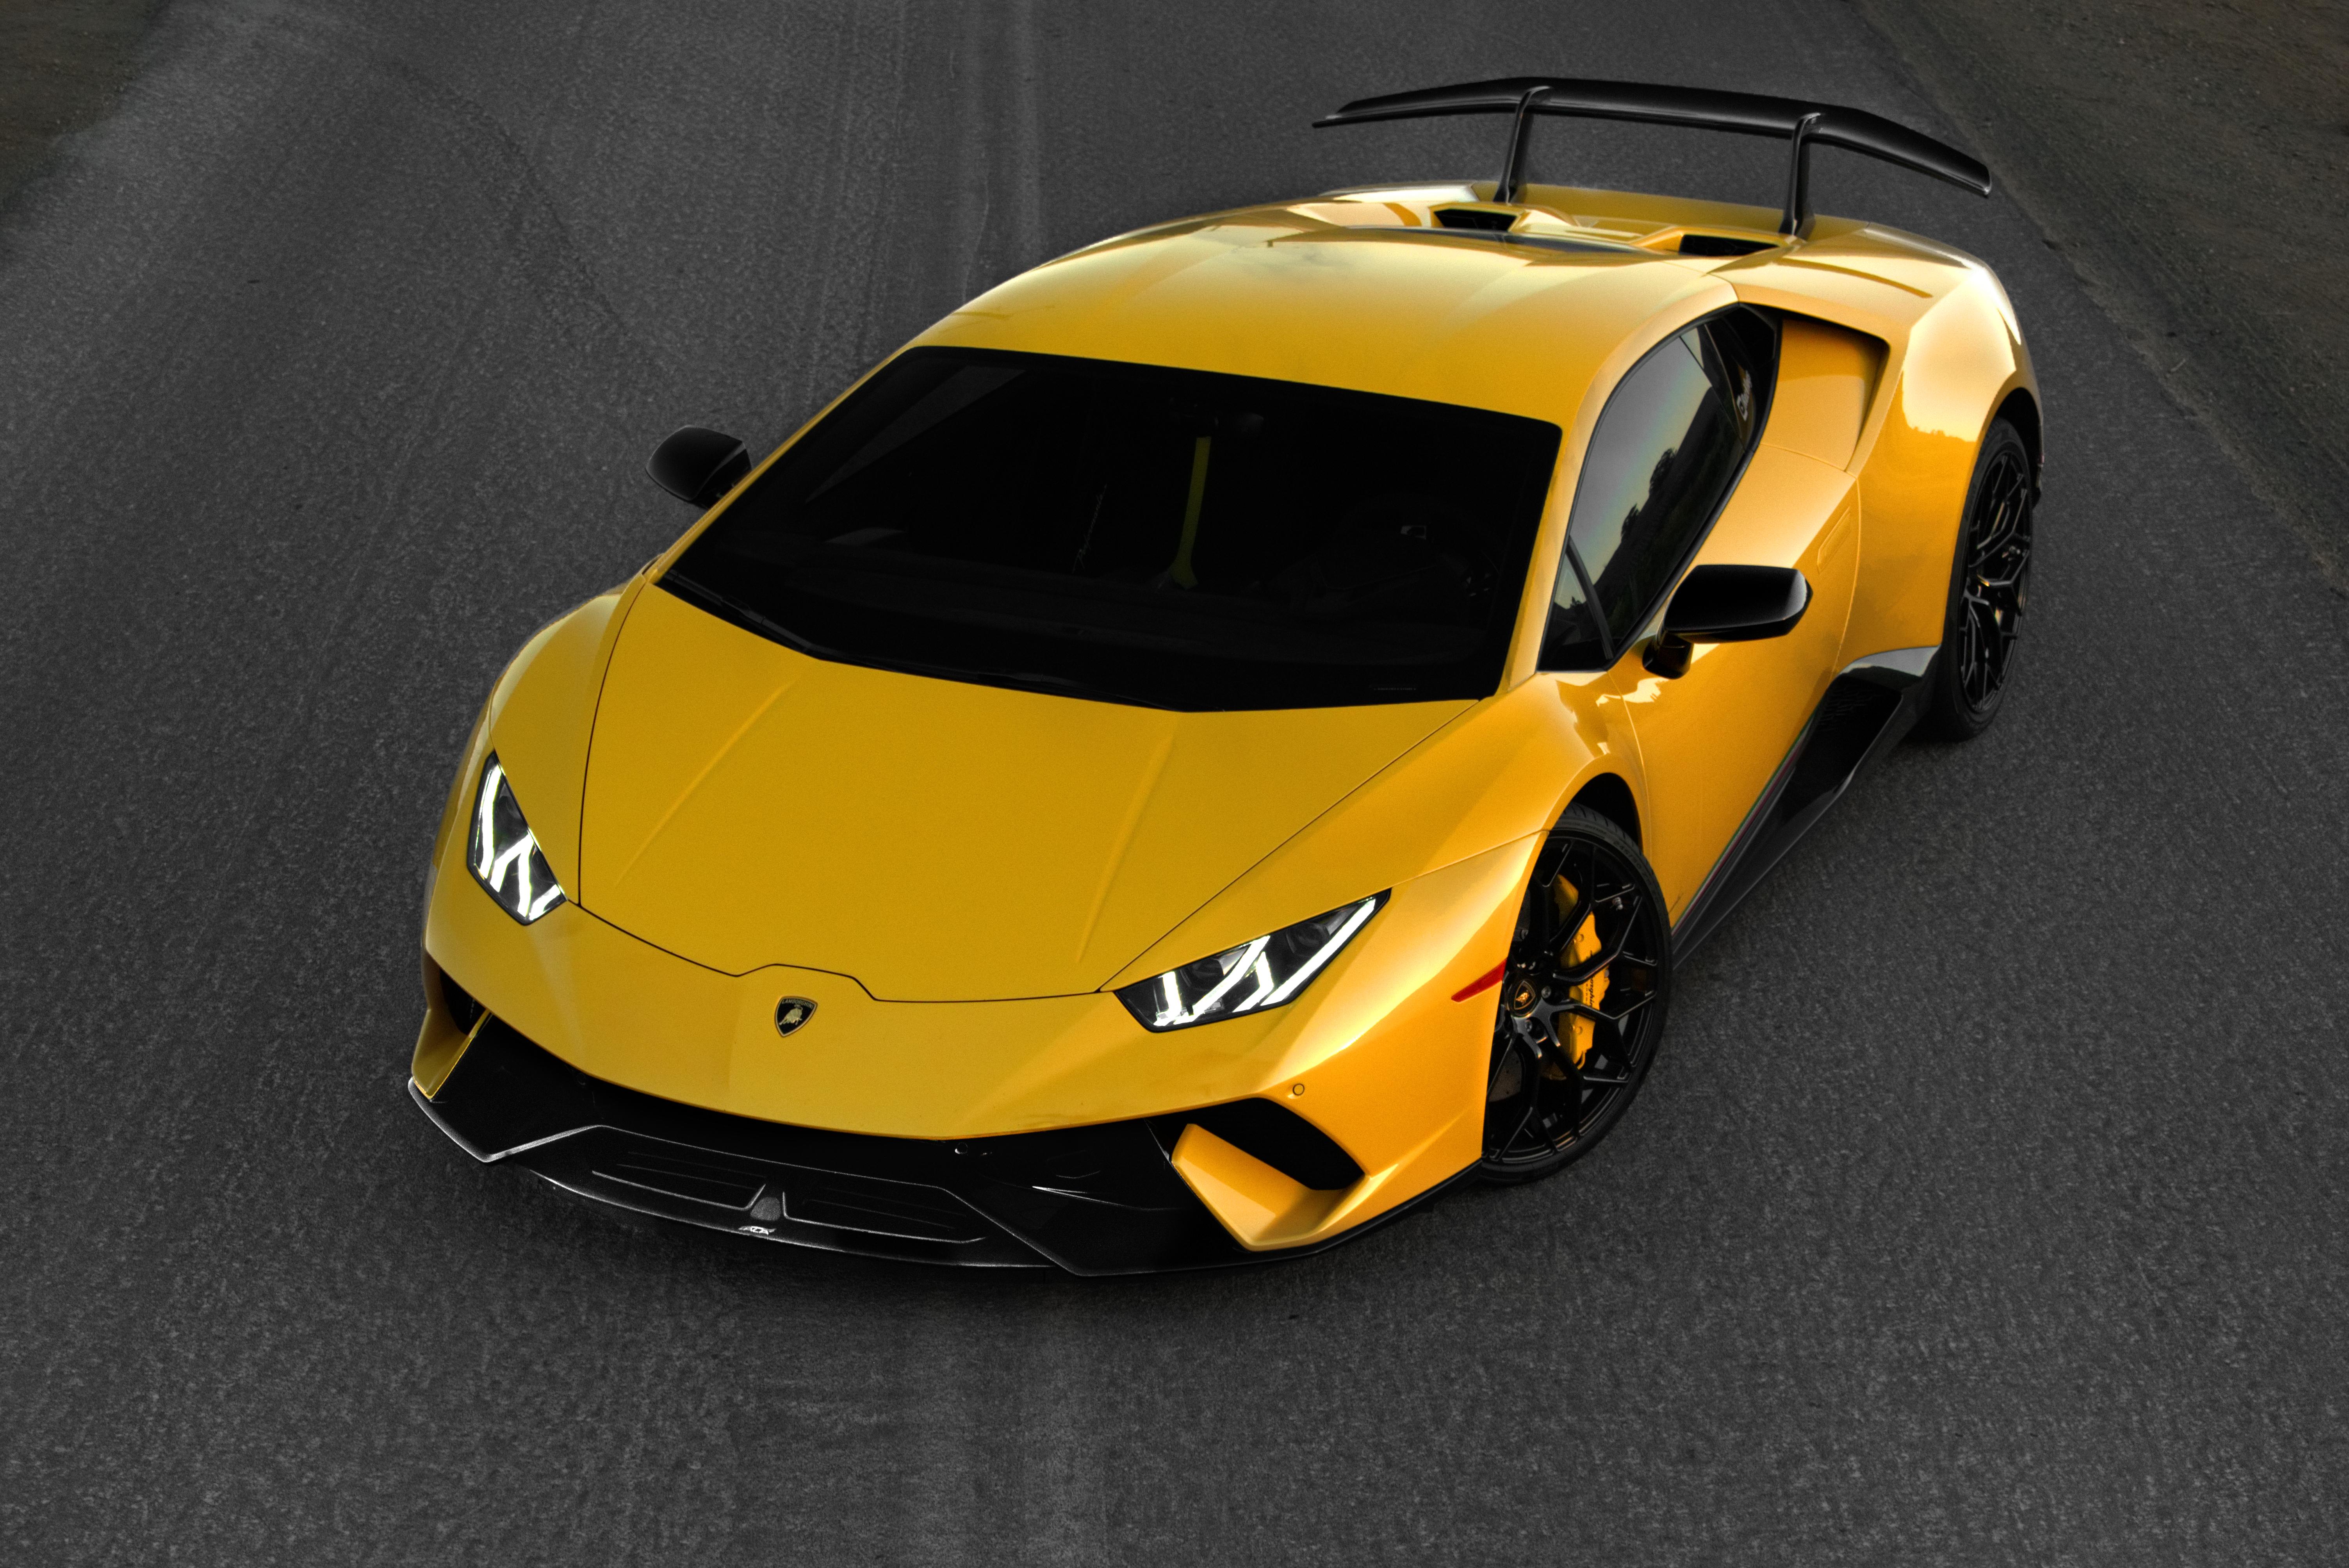 Yellow Lamborghini Aventador 5k 2018, HD Cars, 4k Wallpapers, Images